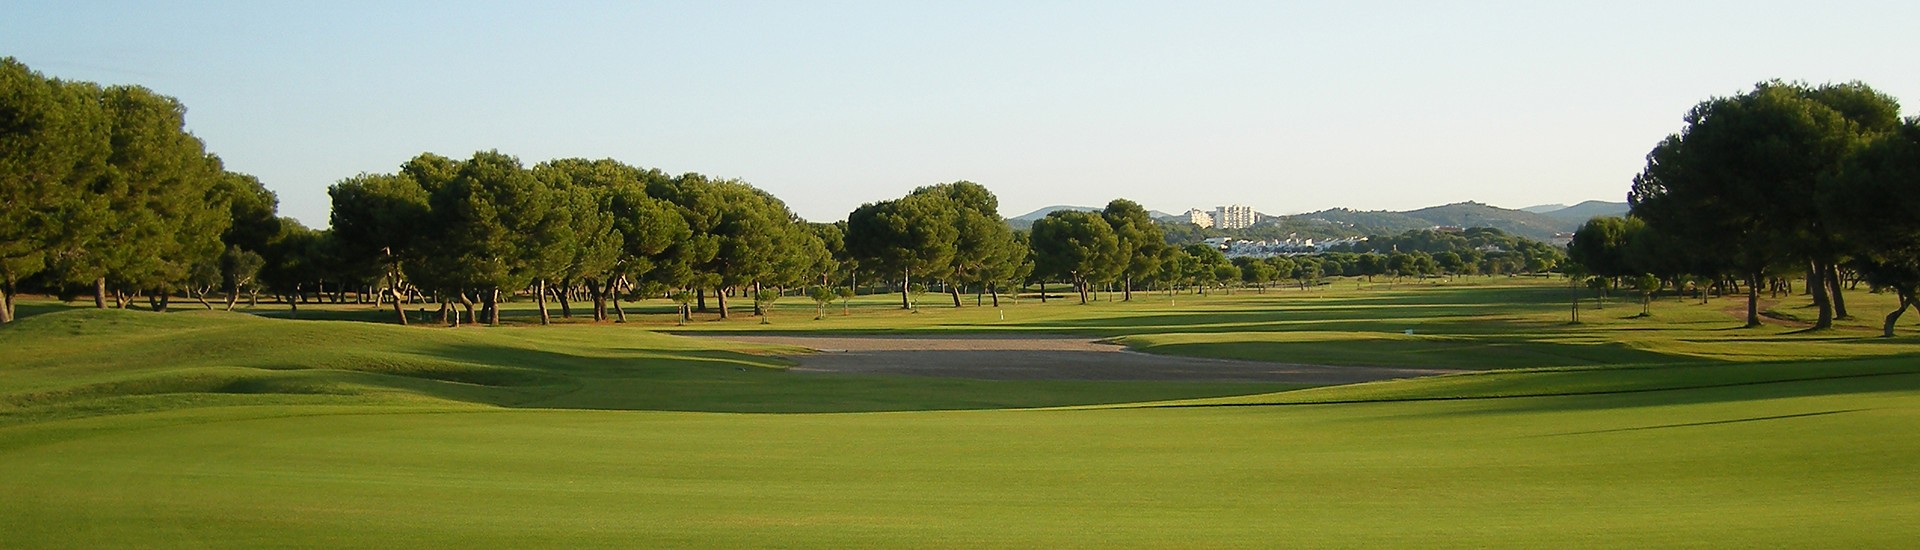 Club de Golf Terramar